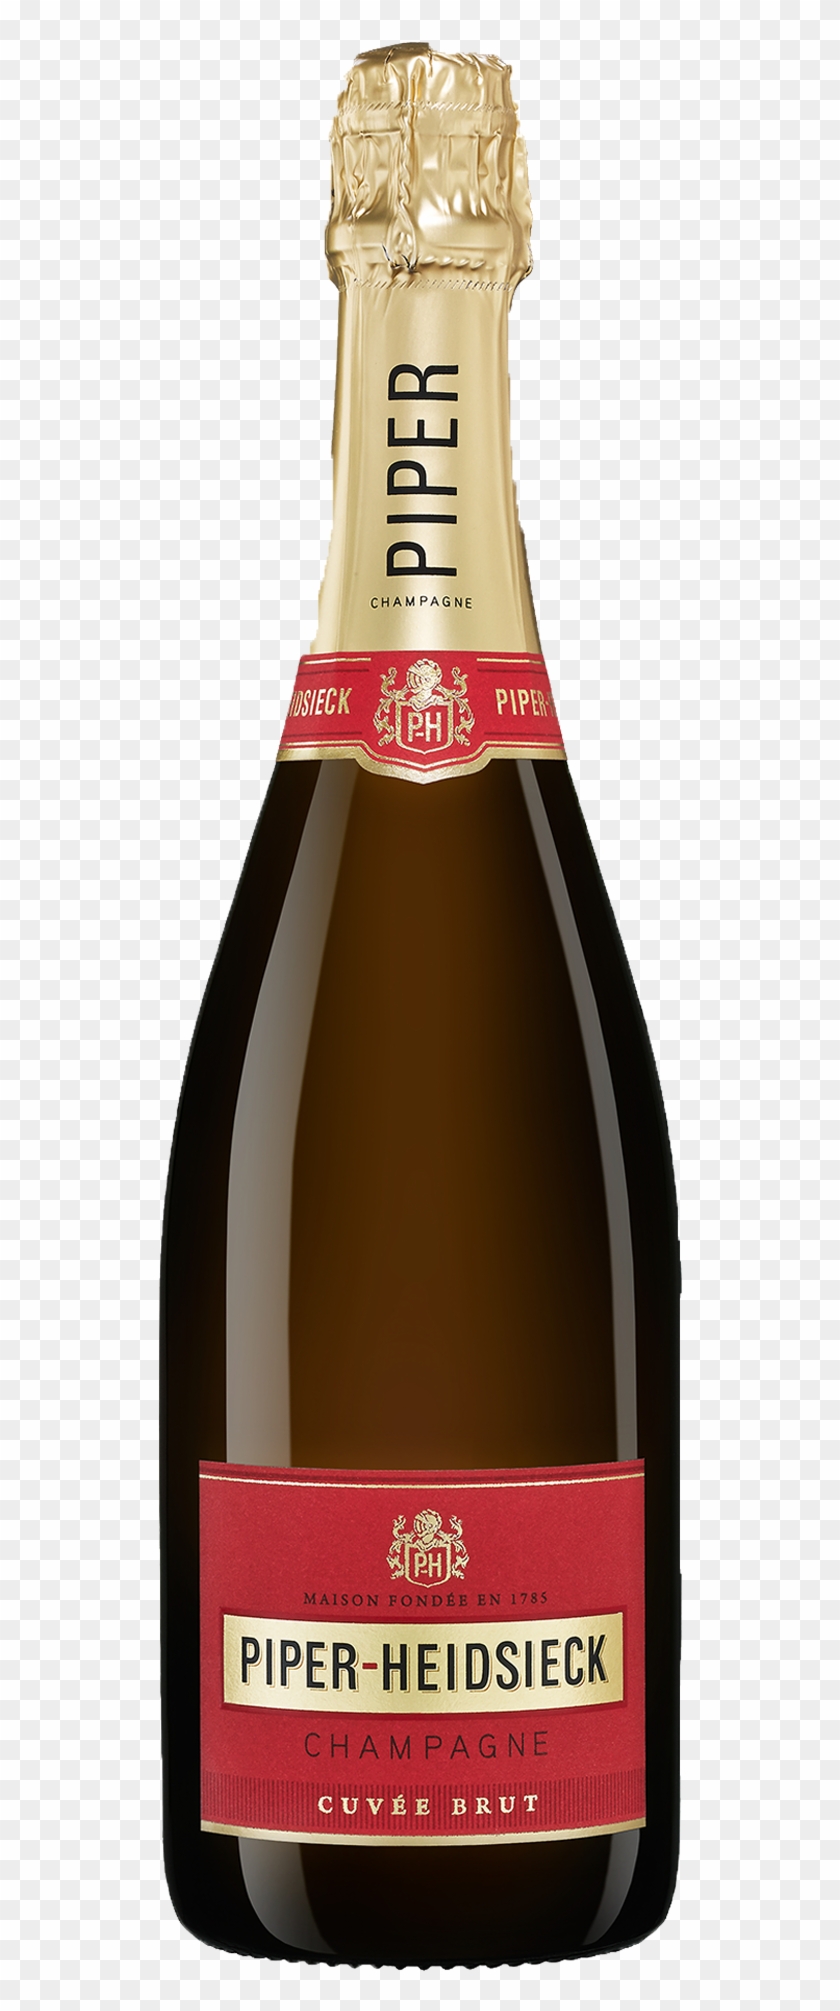 Piper-heidsieck Brut Champagne Bottle Clipart